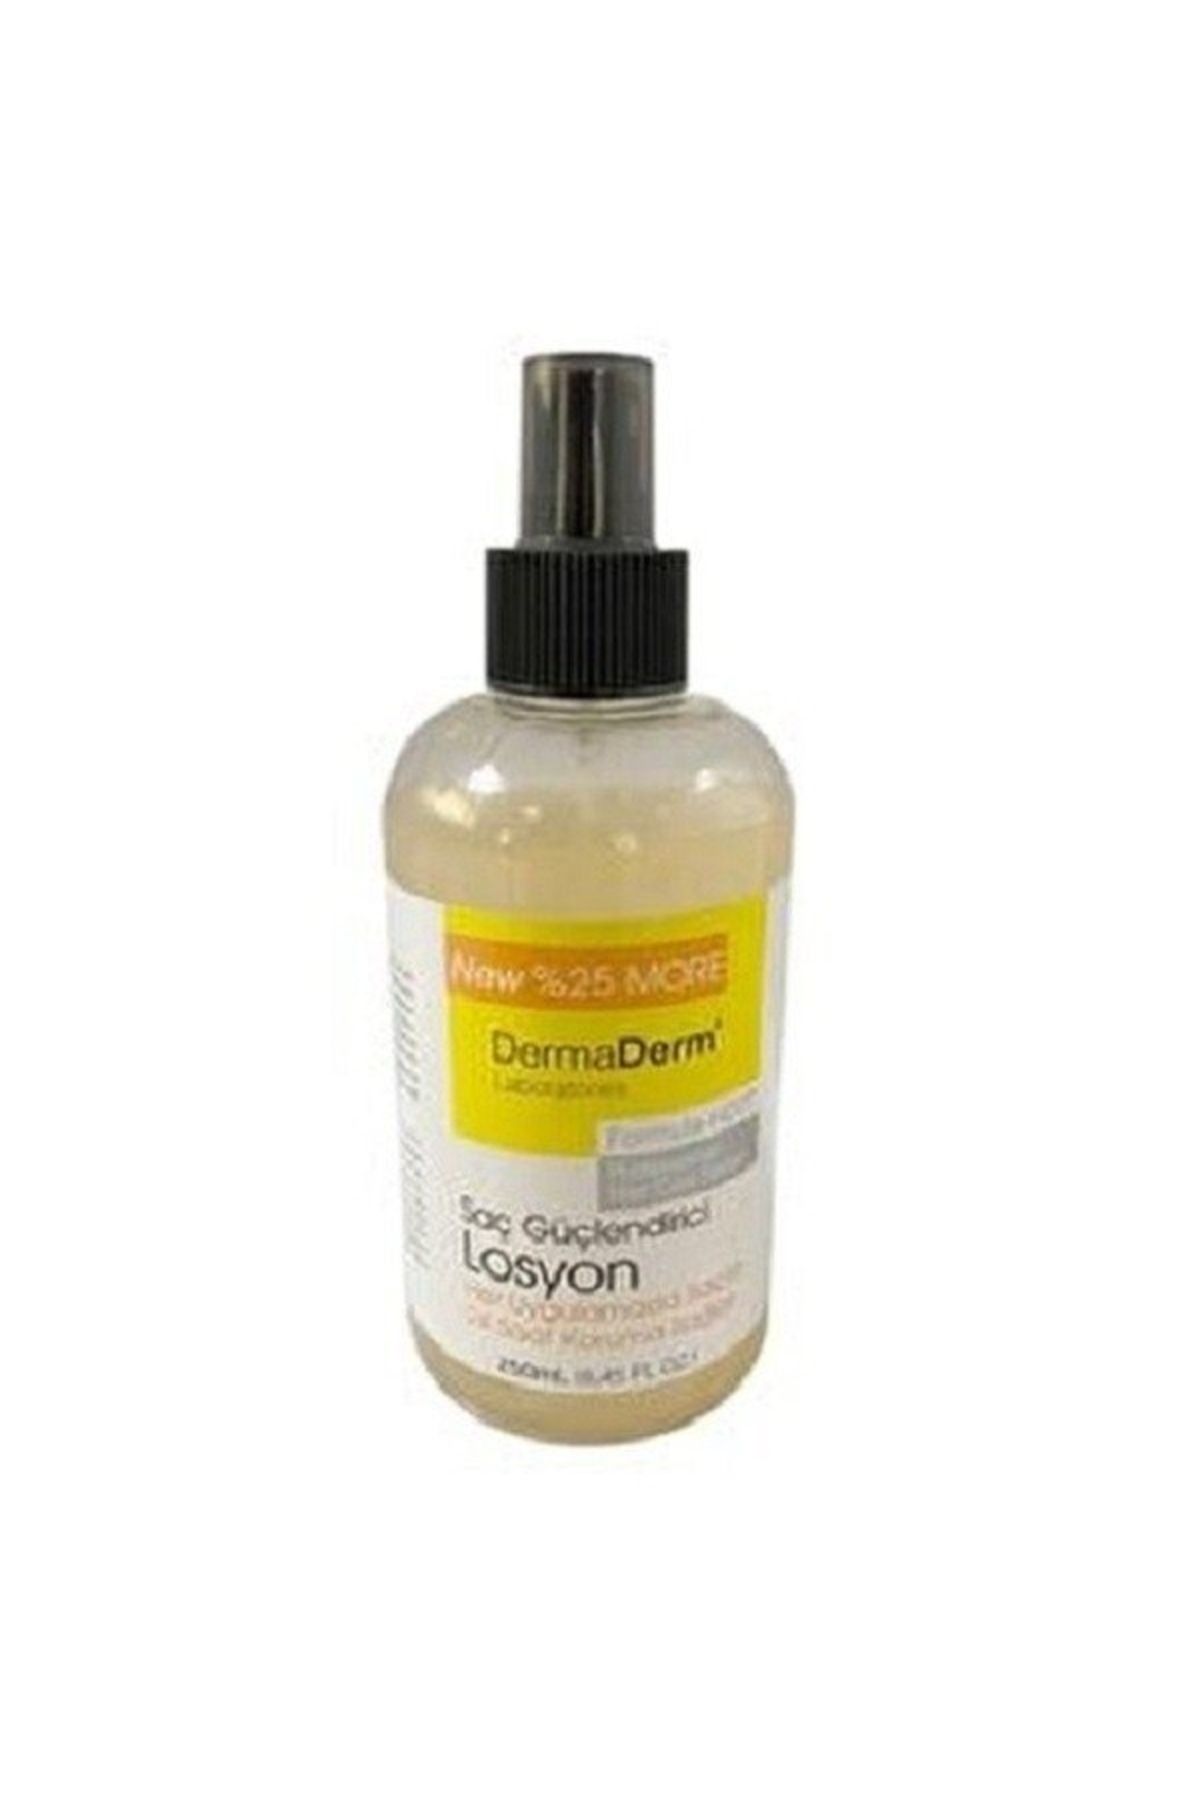 DermaDerm Dermader Saç Güçlendirici Losyon Fromula-hd77 - 250 ml